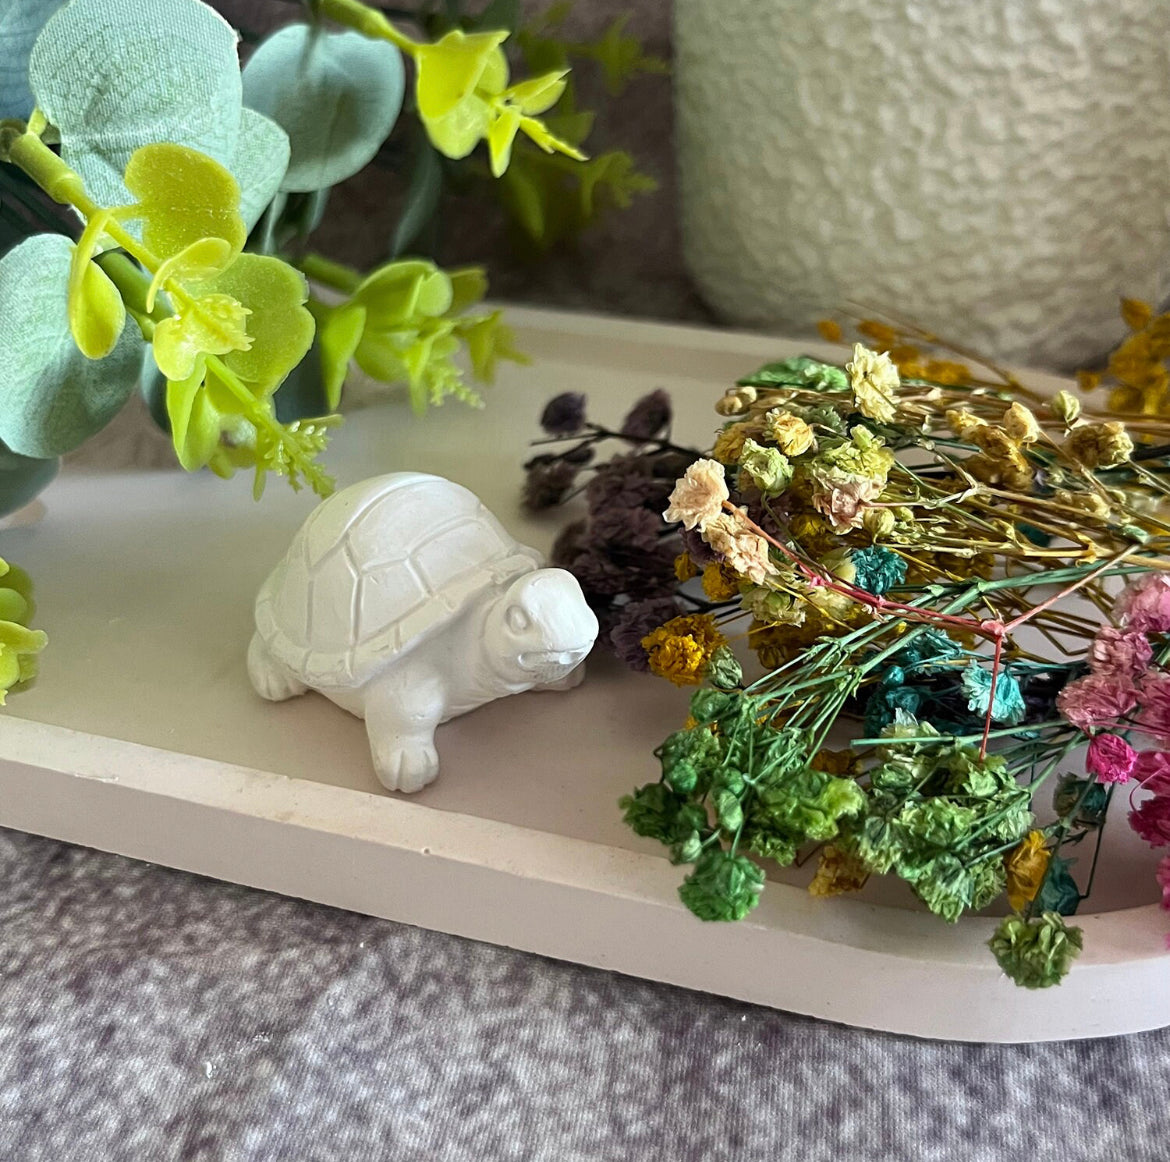 Mini Turtle